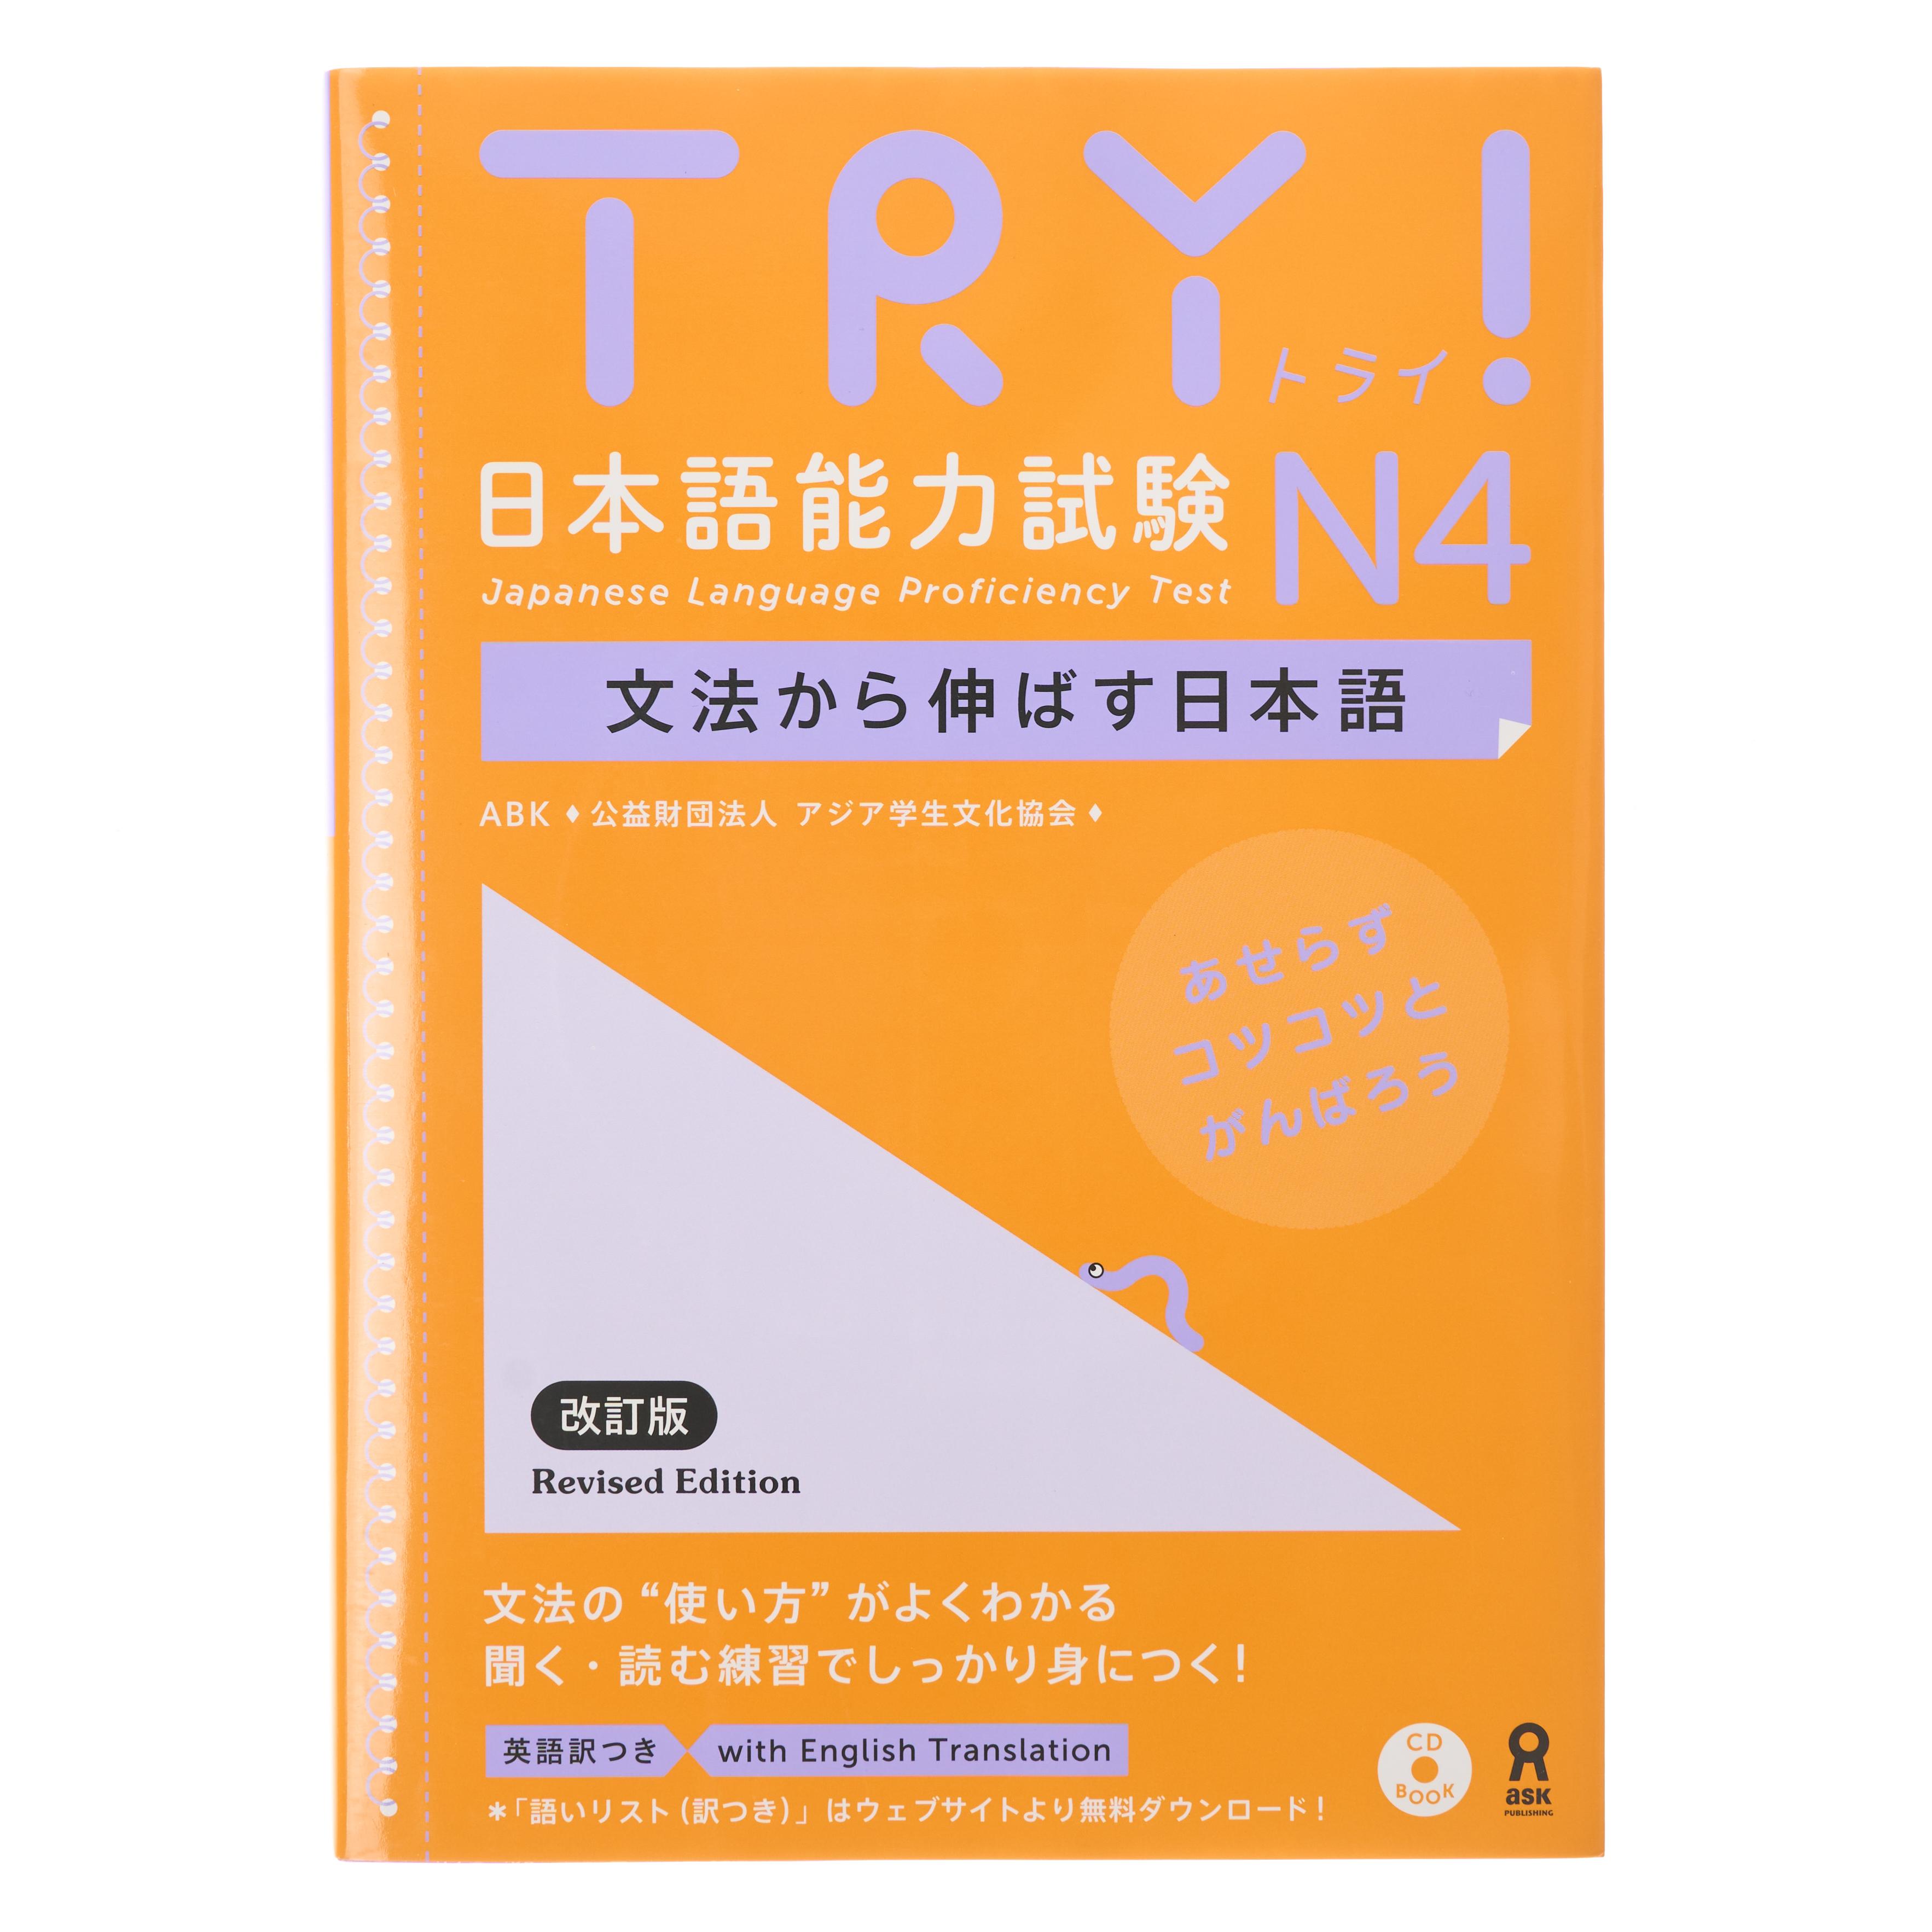 Nihongo Challenge JLPT N4 Grammar and Reading Practice - 697 g - ジャパンセンター